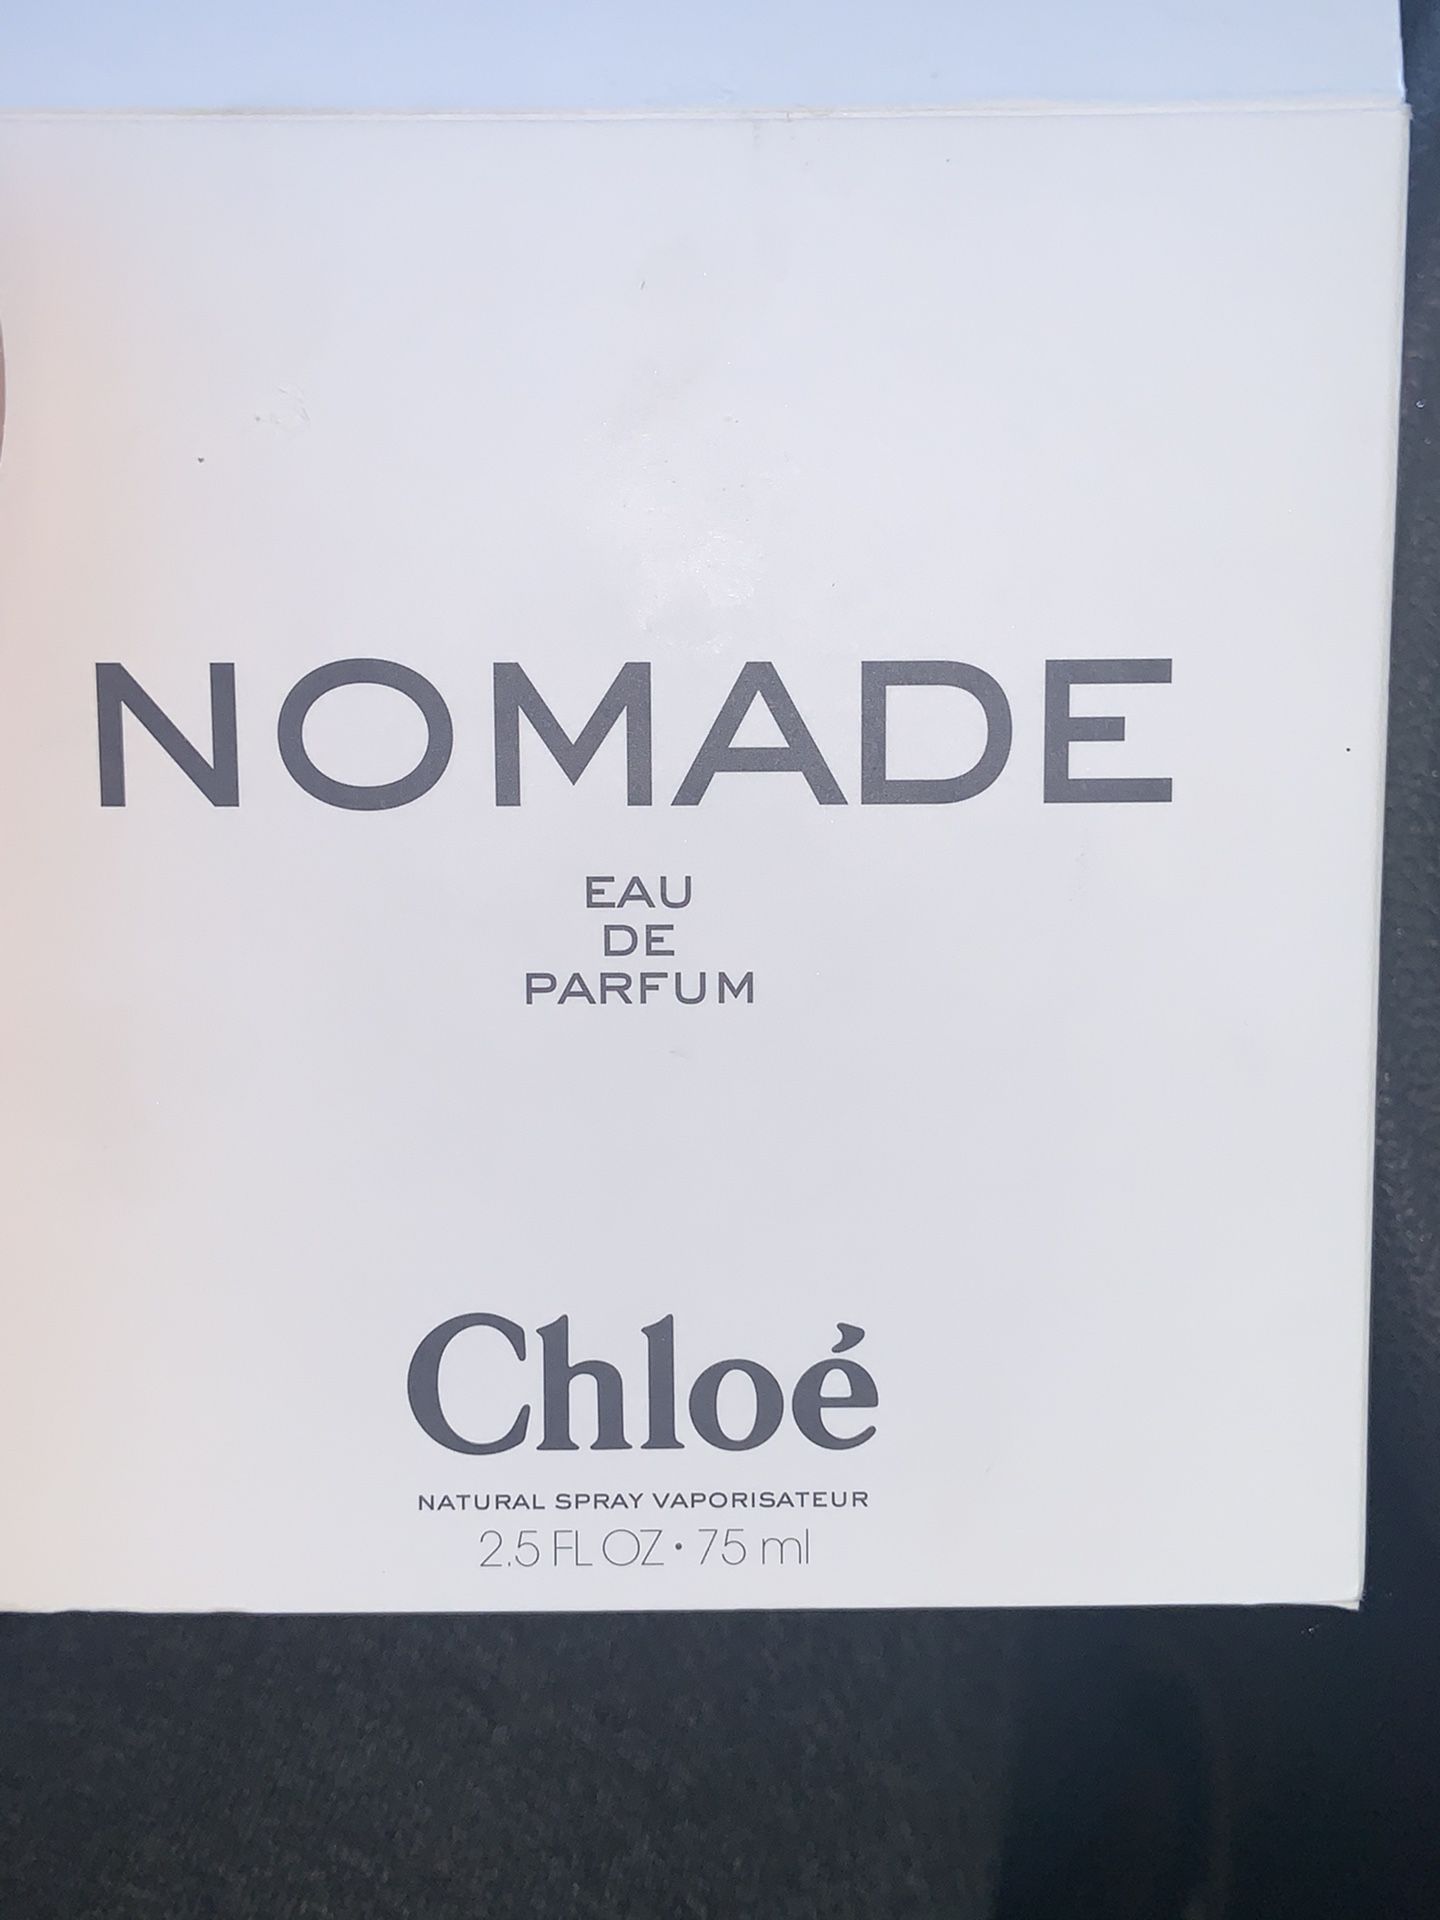 Chloe Nomade perfume